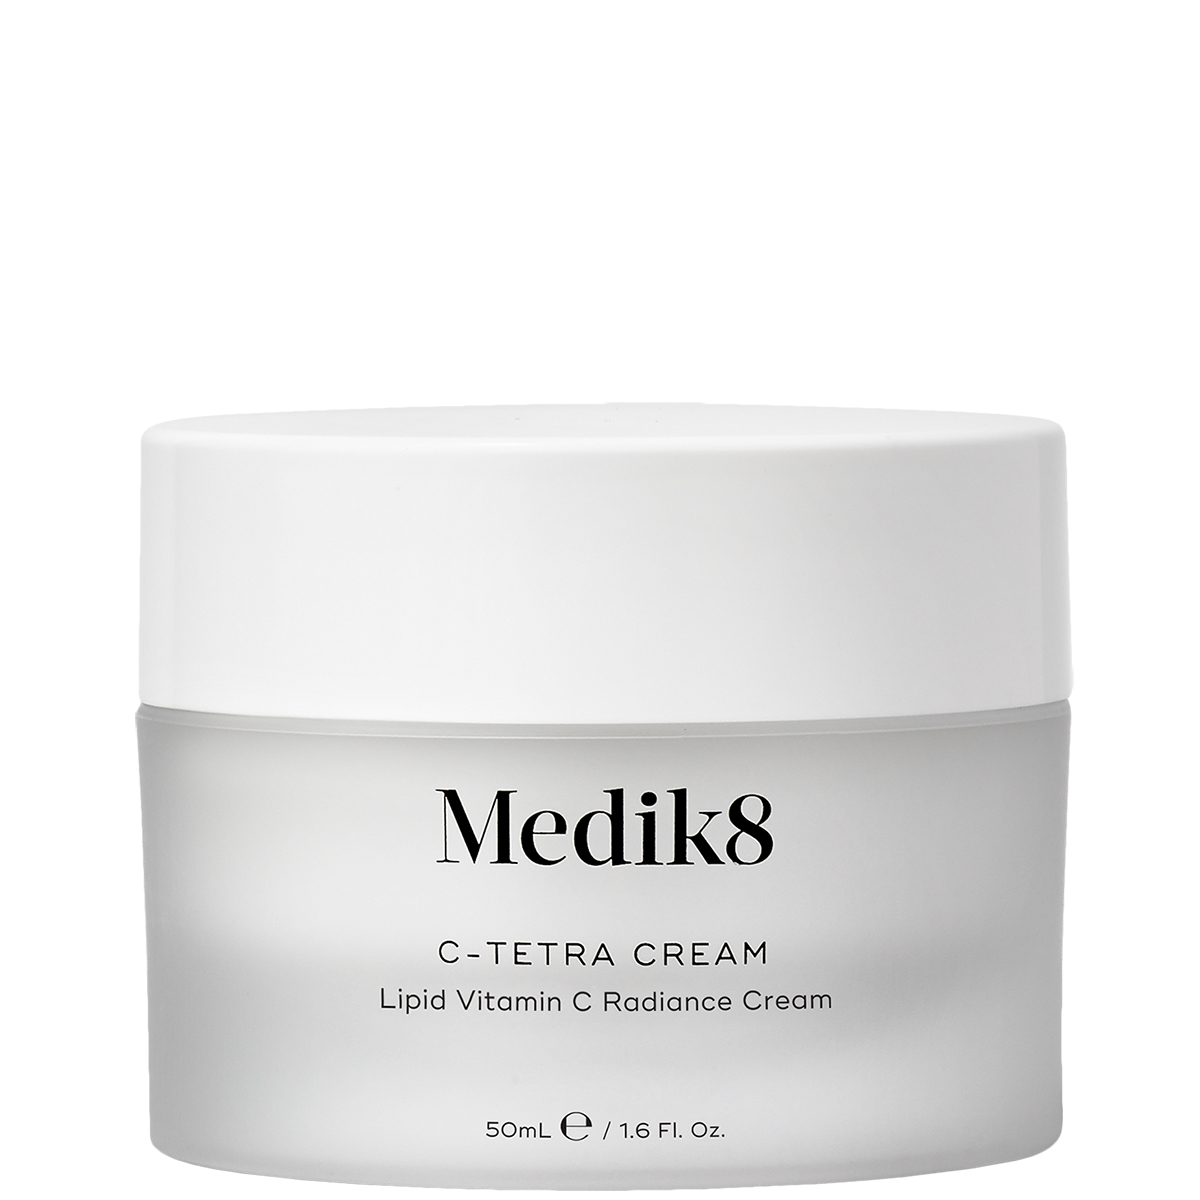 Medik8 C-tetra Cream